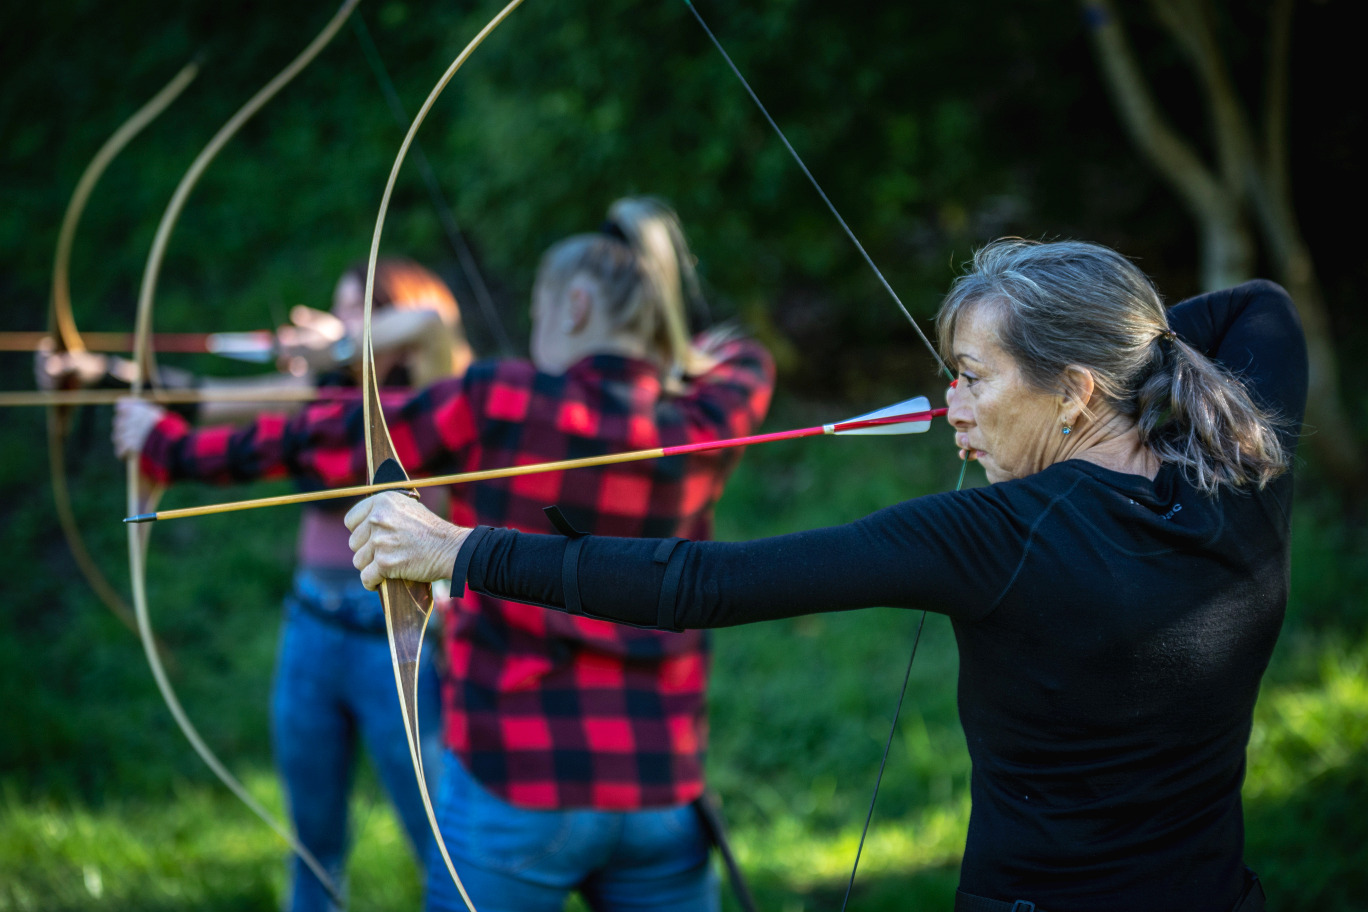 Archery Park Nelson - Archery Adventures in Stunning Native Bush Attraction...